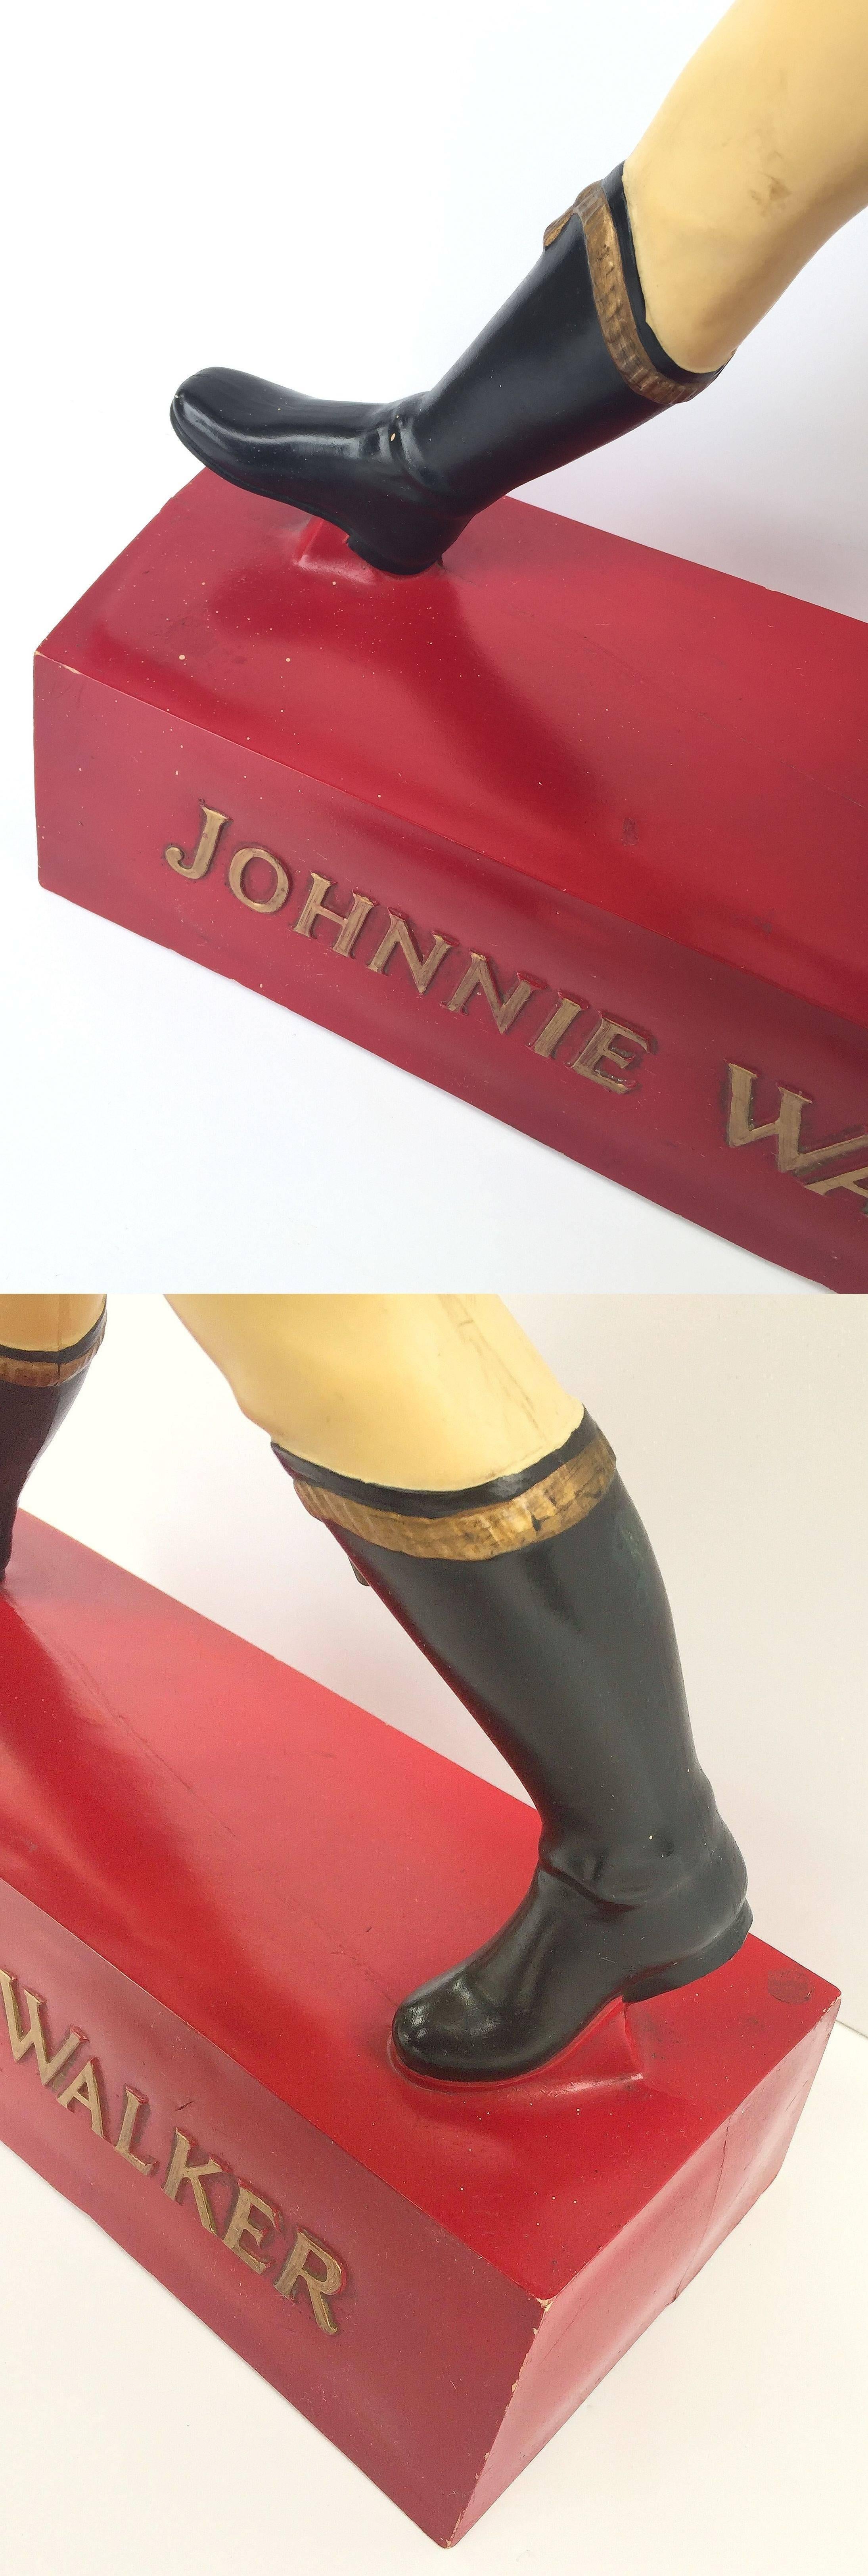 Large Vintage Johnnie Walker Scotch Whisky Figure Advertising Prop 1